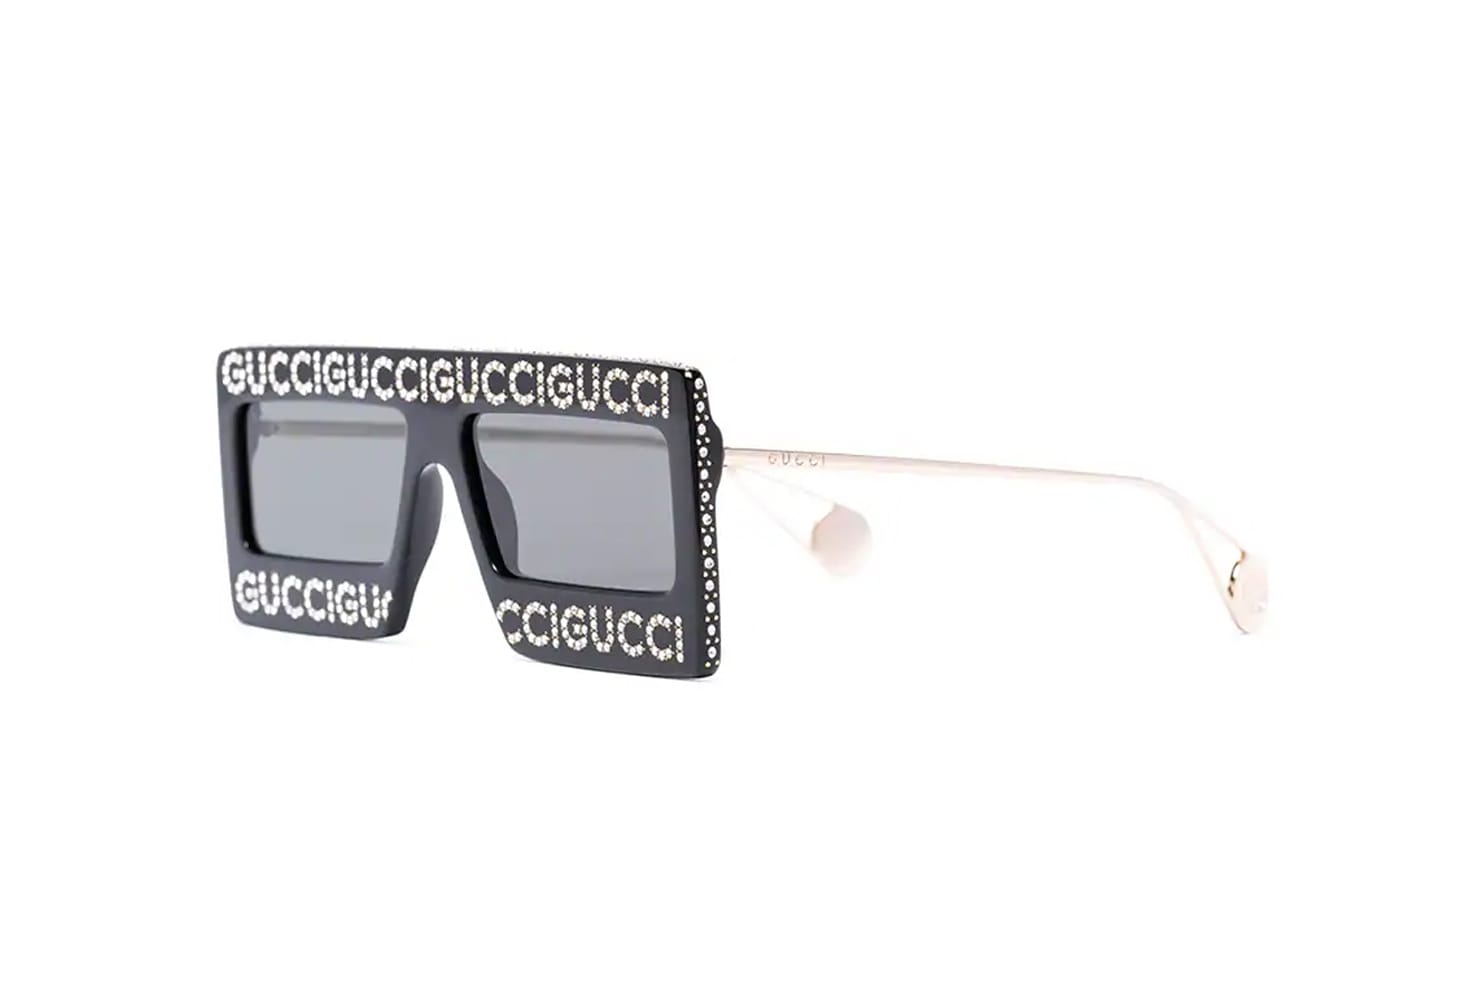 gucci glasses with swarovski crystals